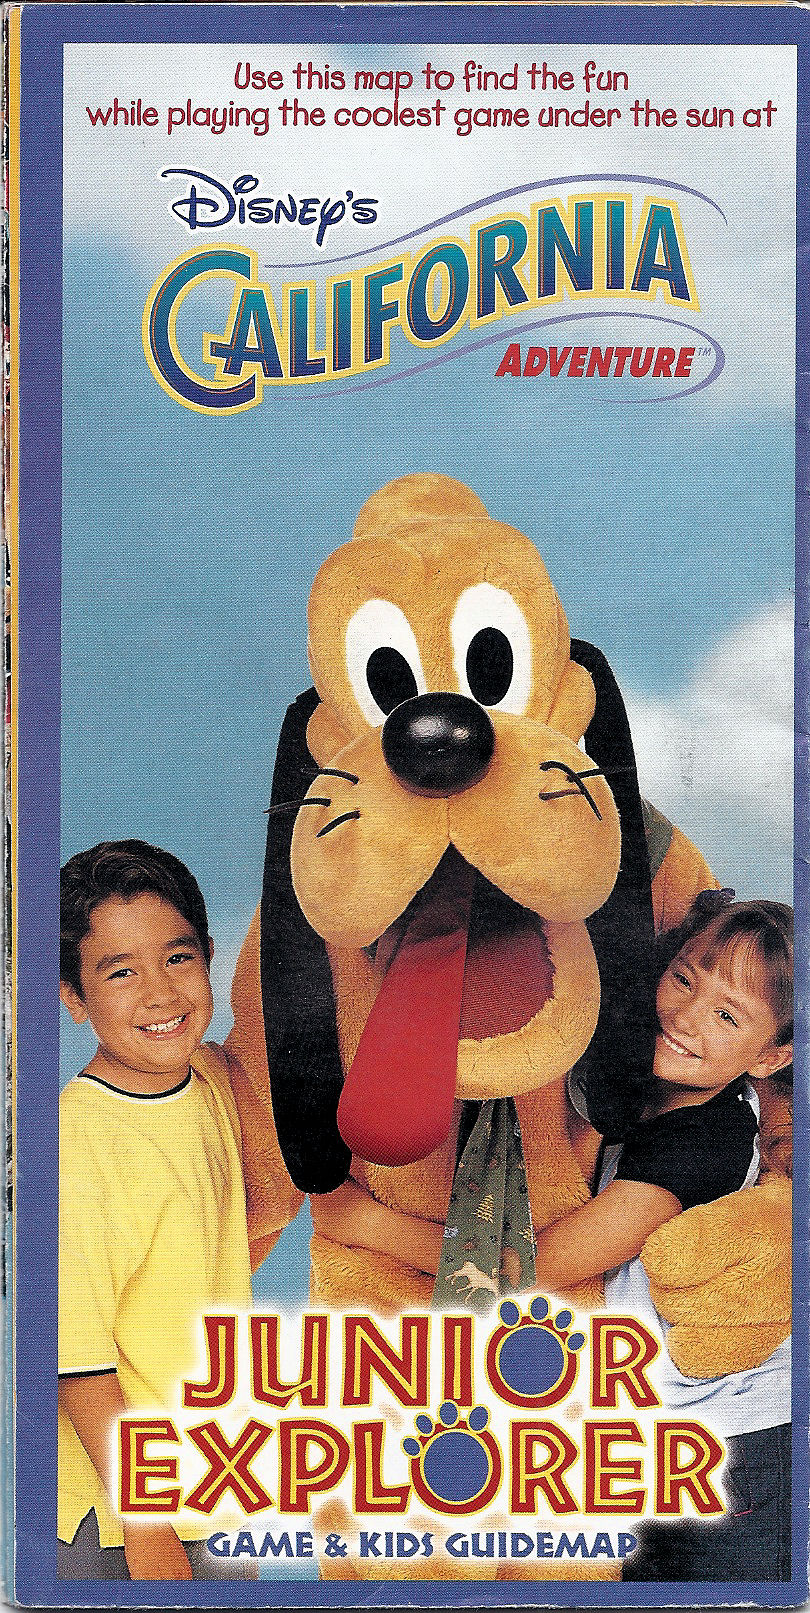 The cover of a Junior Explorer guidemap of Disney's California Adventure.